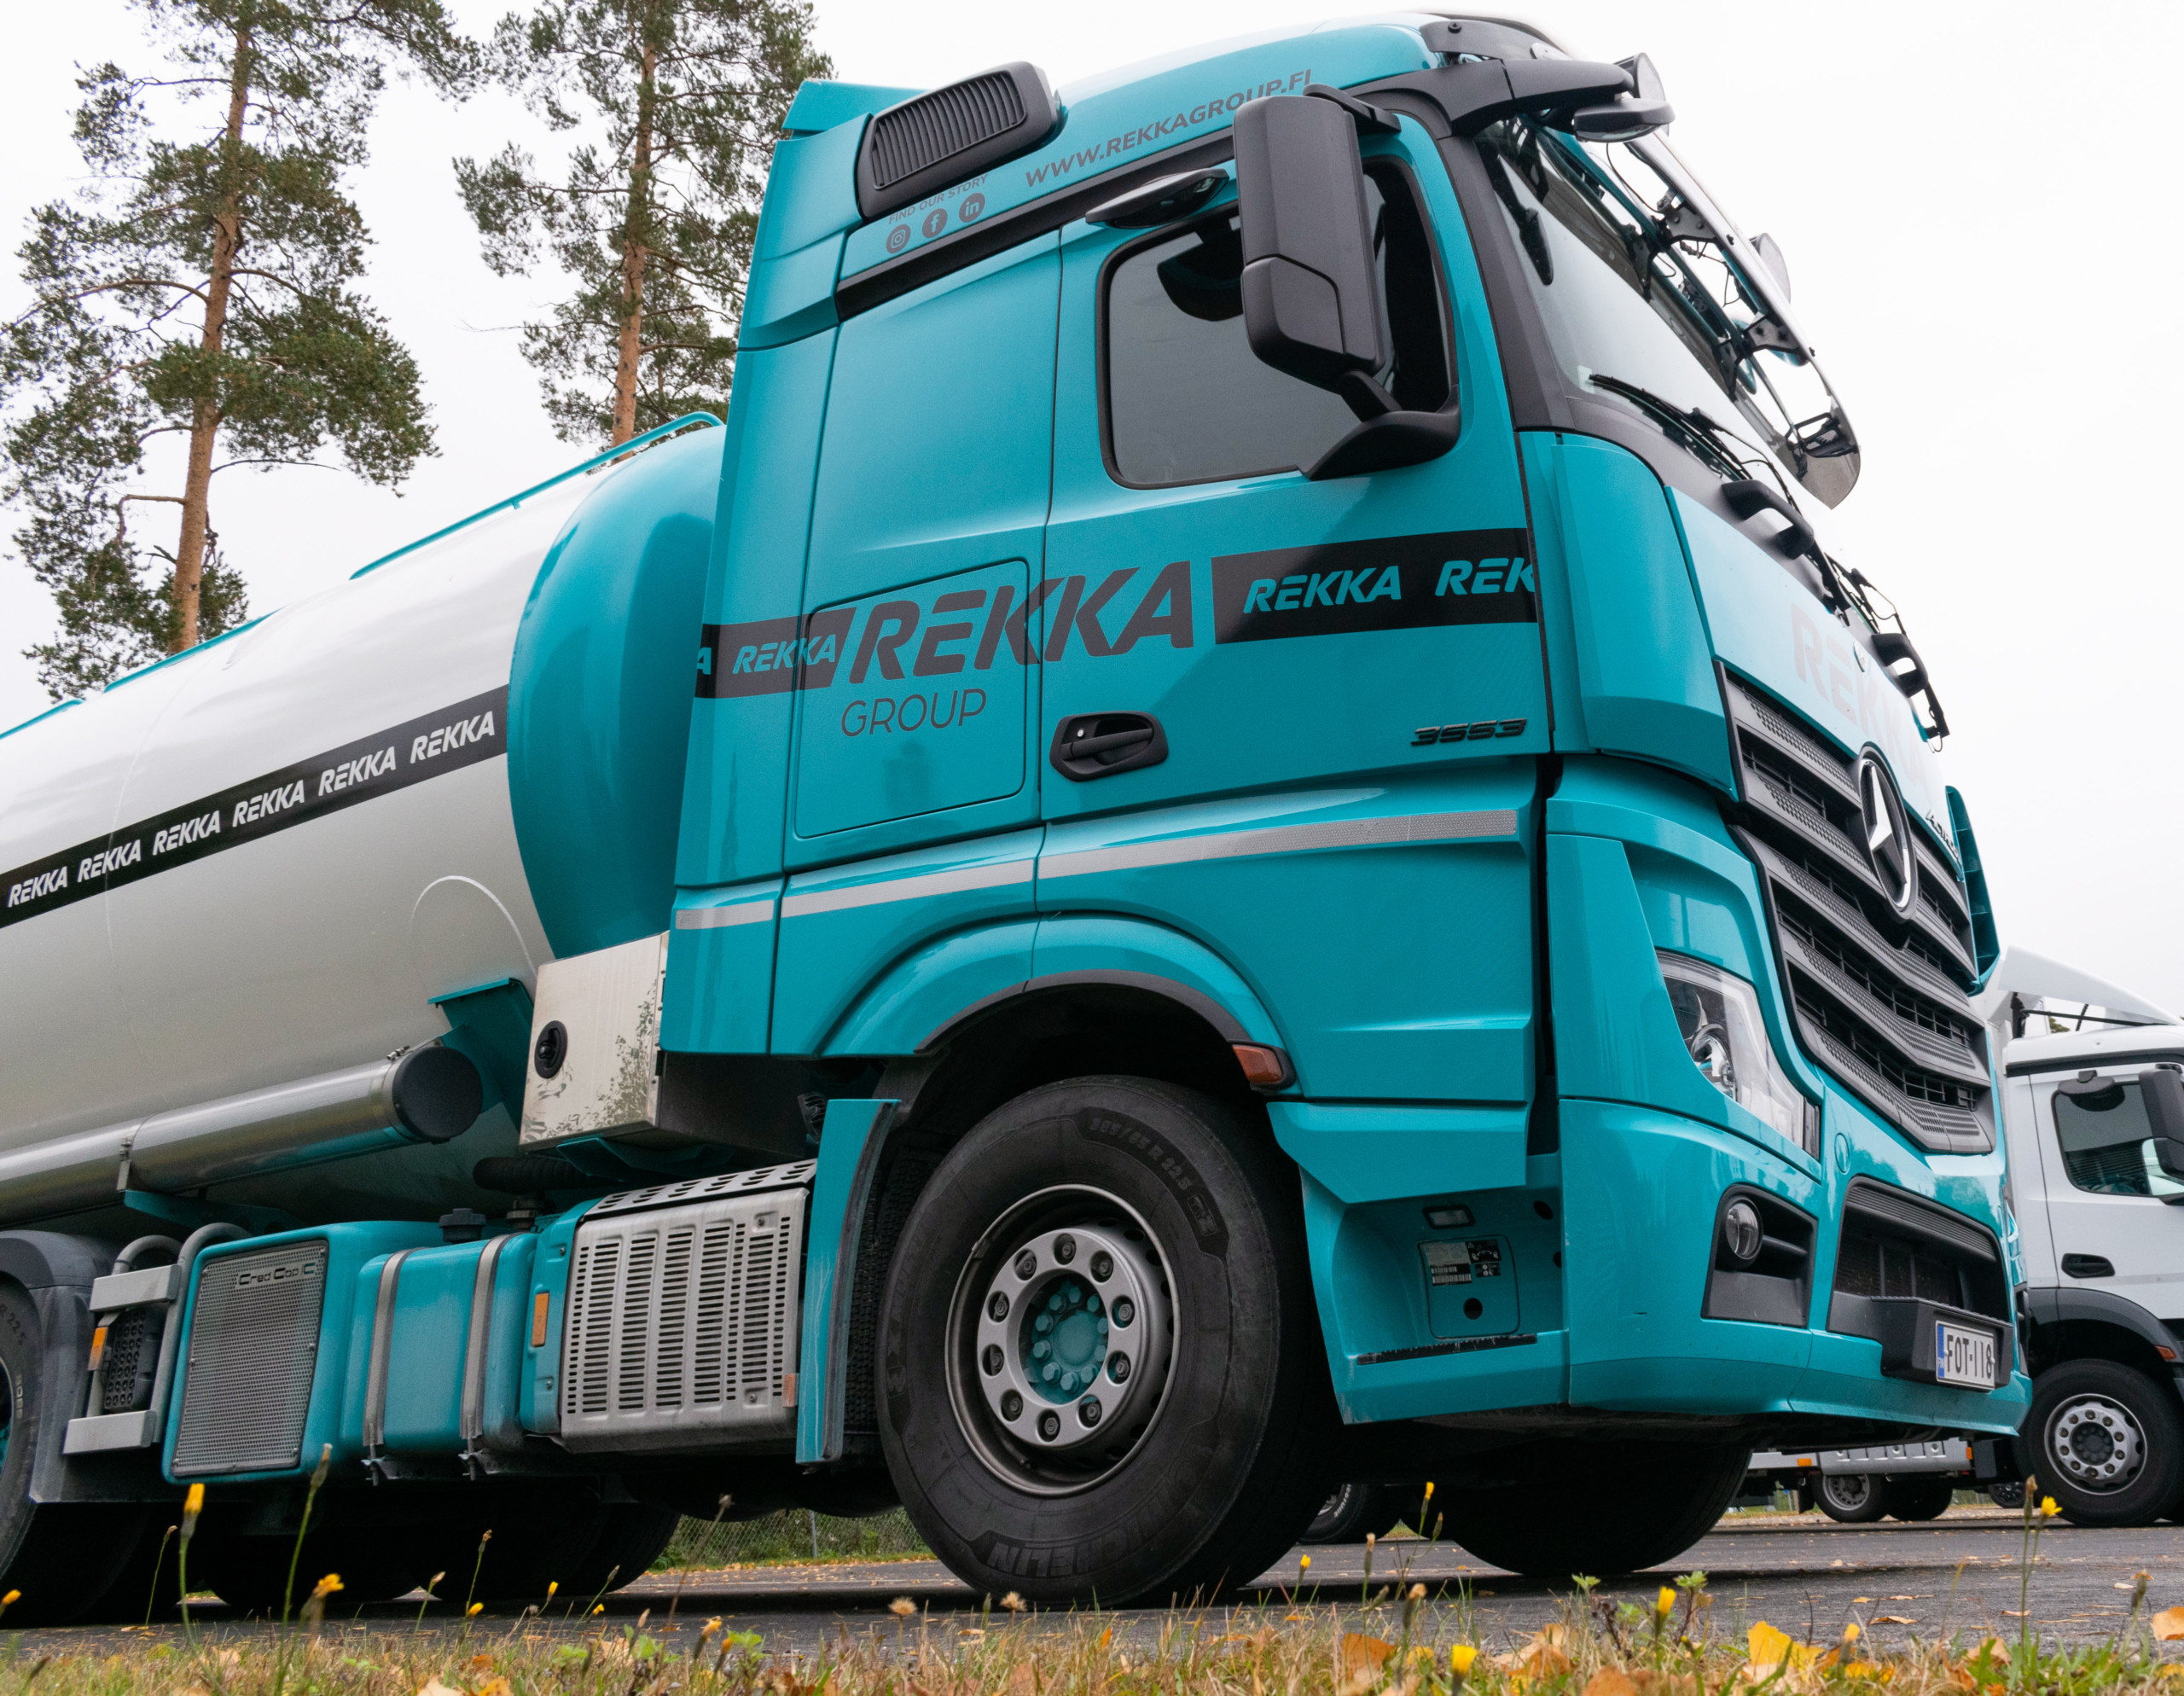 Rekka Group truck